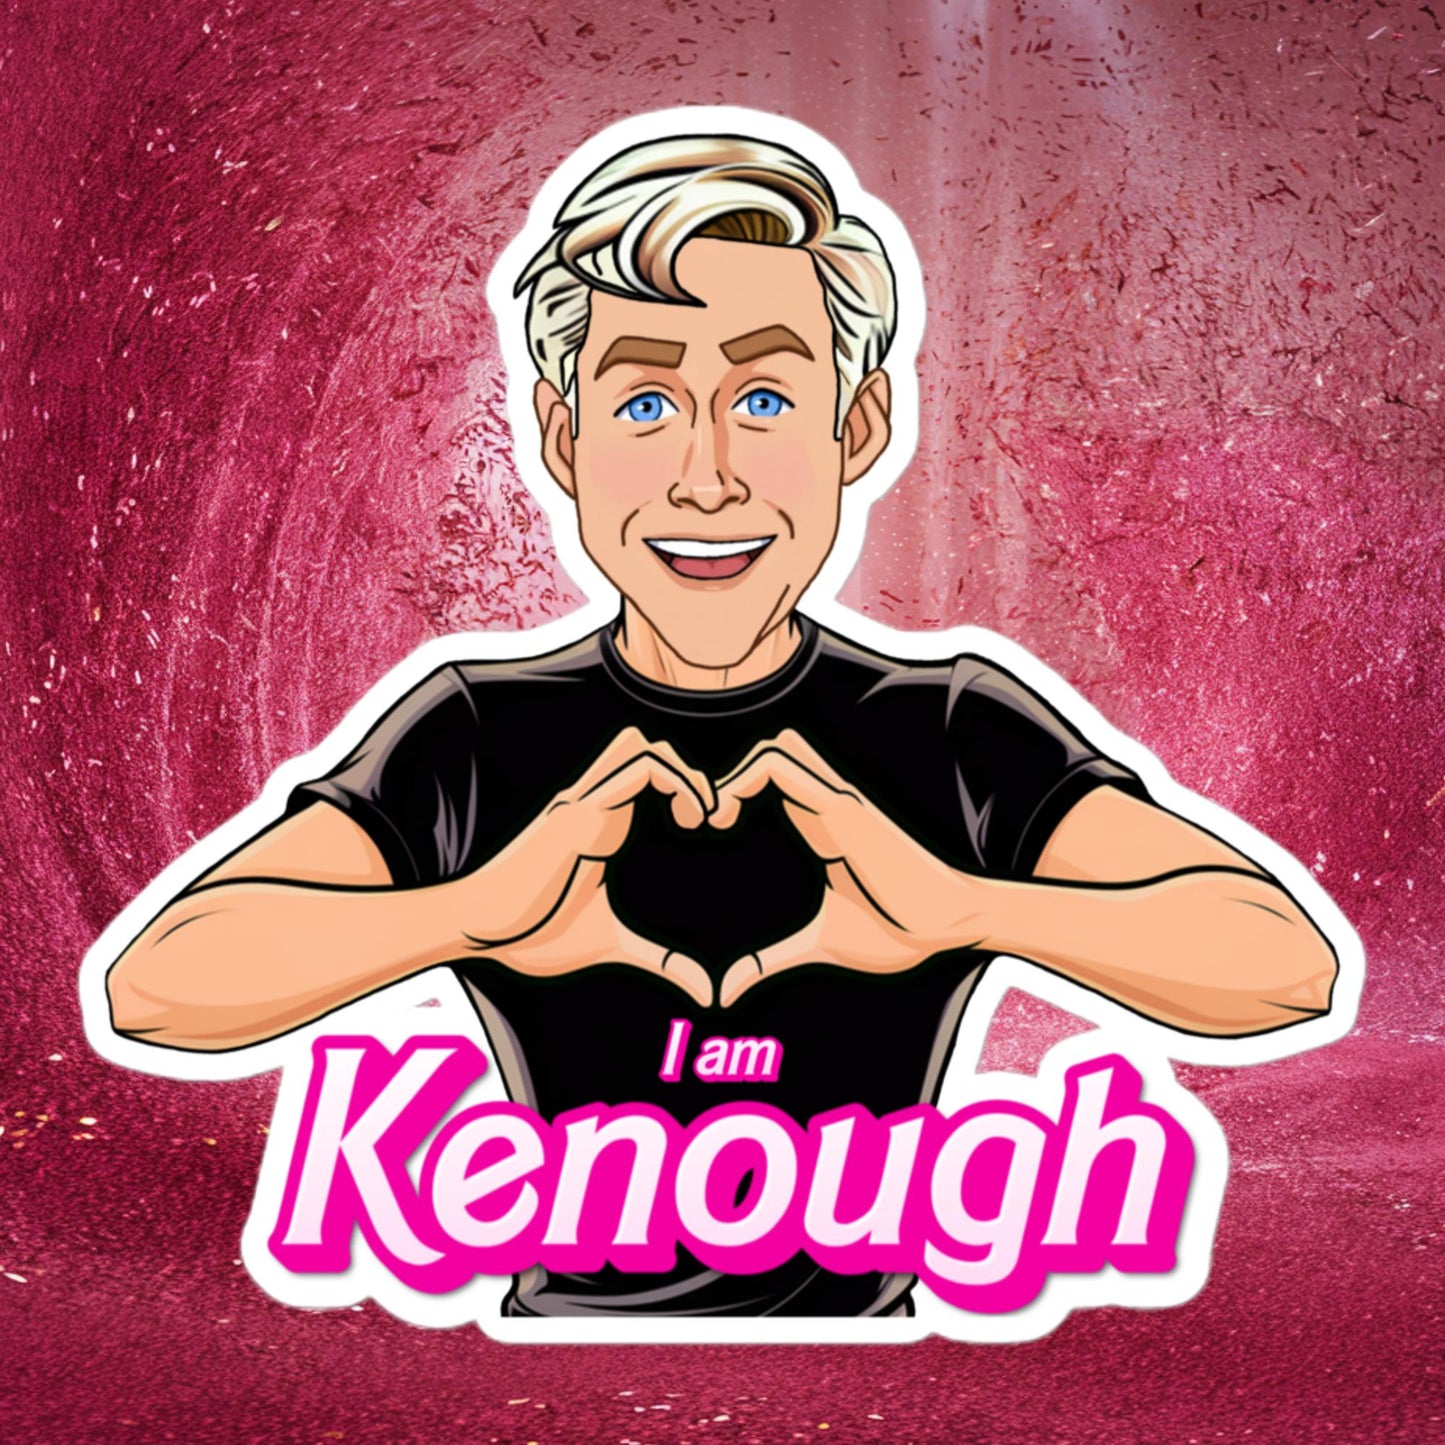 I am Kenough Ryan Gosling Ken Barbie Movie Bubble-free stickers Next Cult Brand